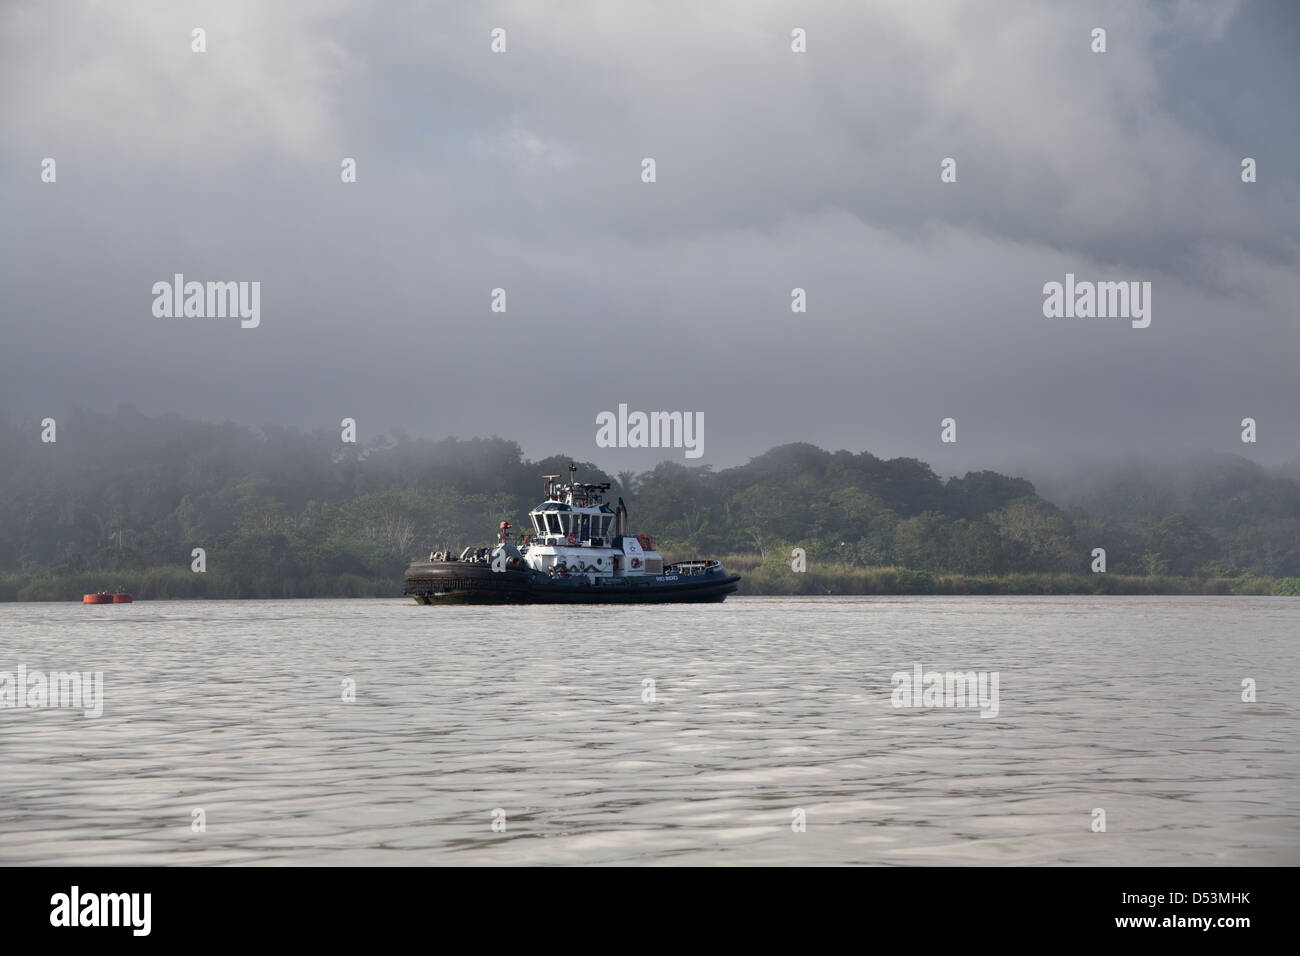 Tug Boat on the Panama canal, Republic of Panama. Stock Photo